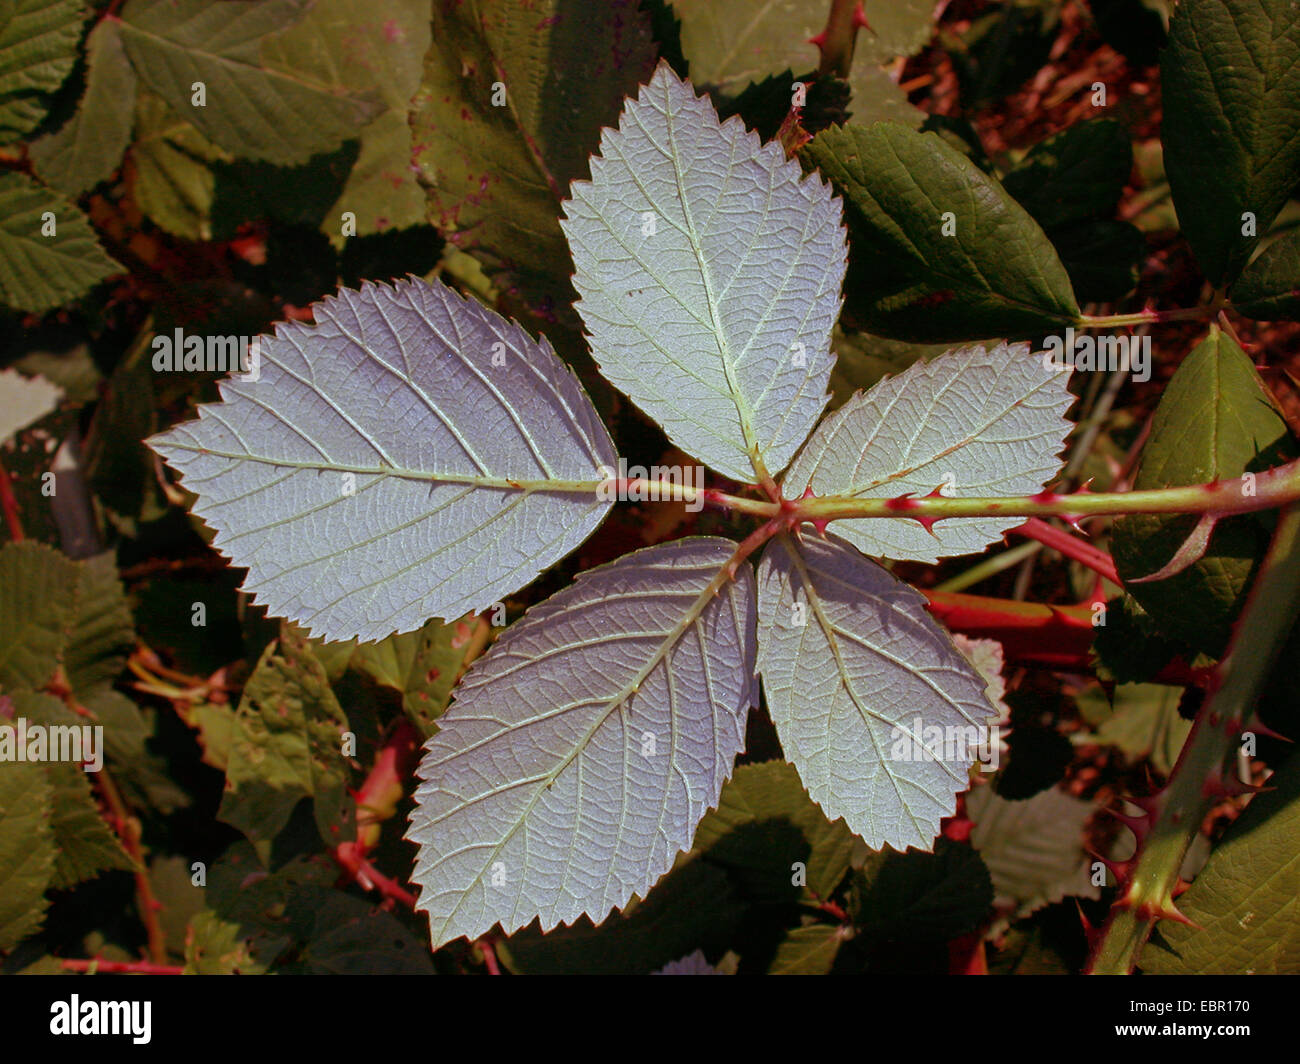 Armenian blackberry (Rubus armeniacus), leaf, underside, Germany Stock Photo